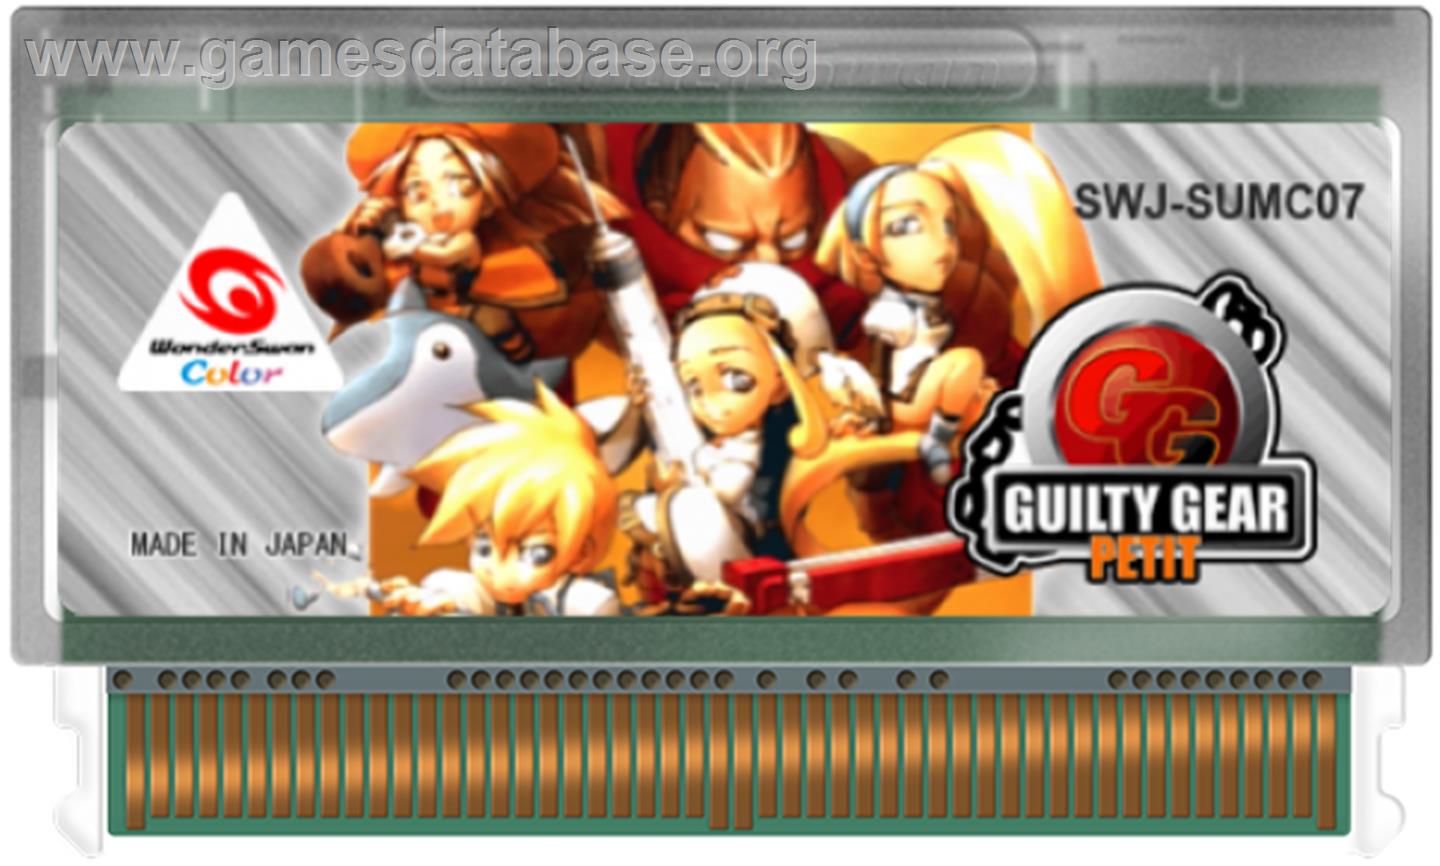 Guilty Gear Petit - Bandai WonderSwan Color - Artwork - Cartridge